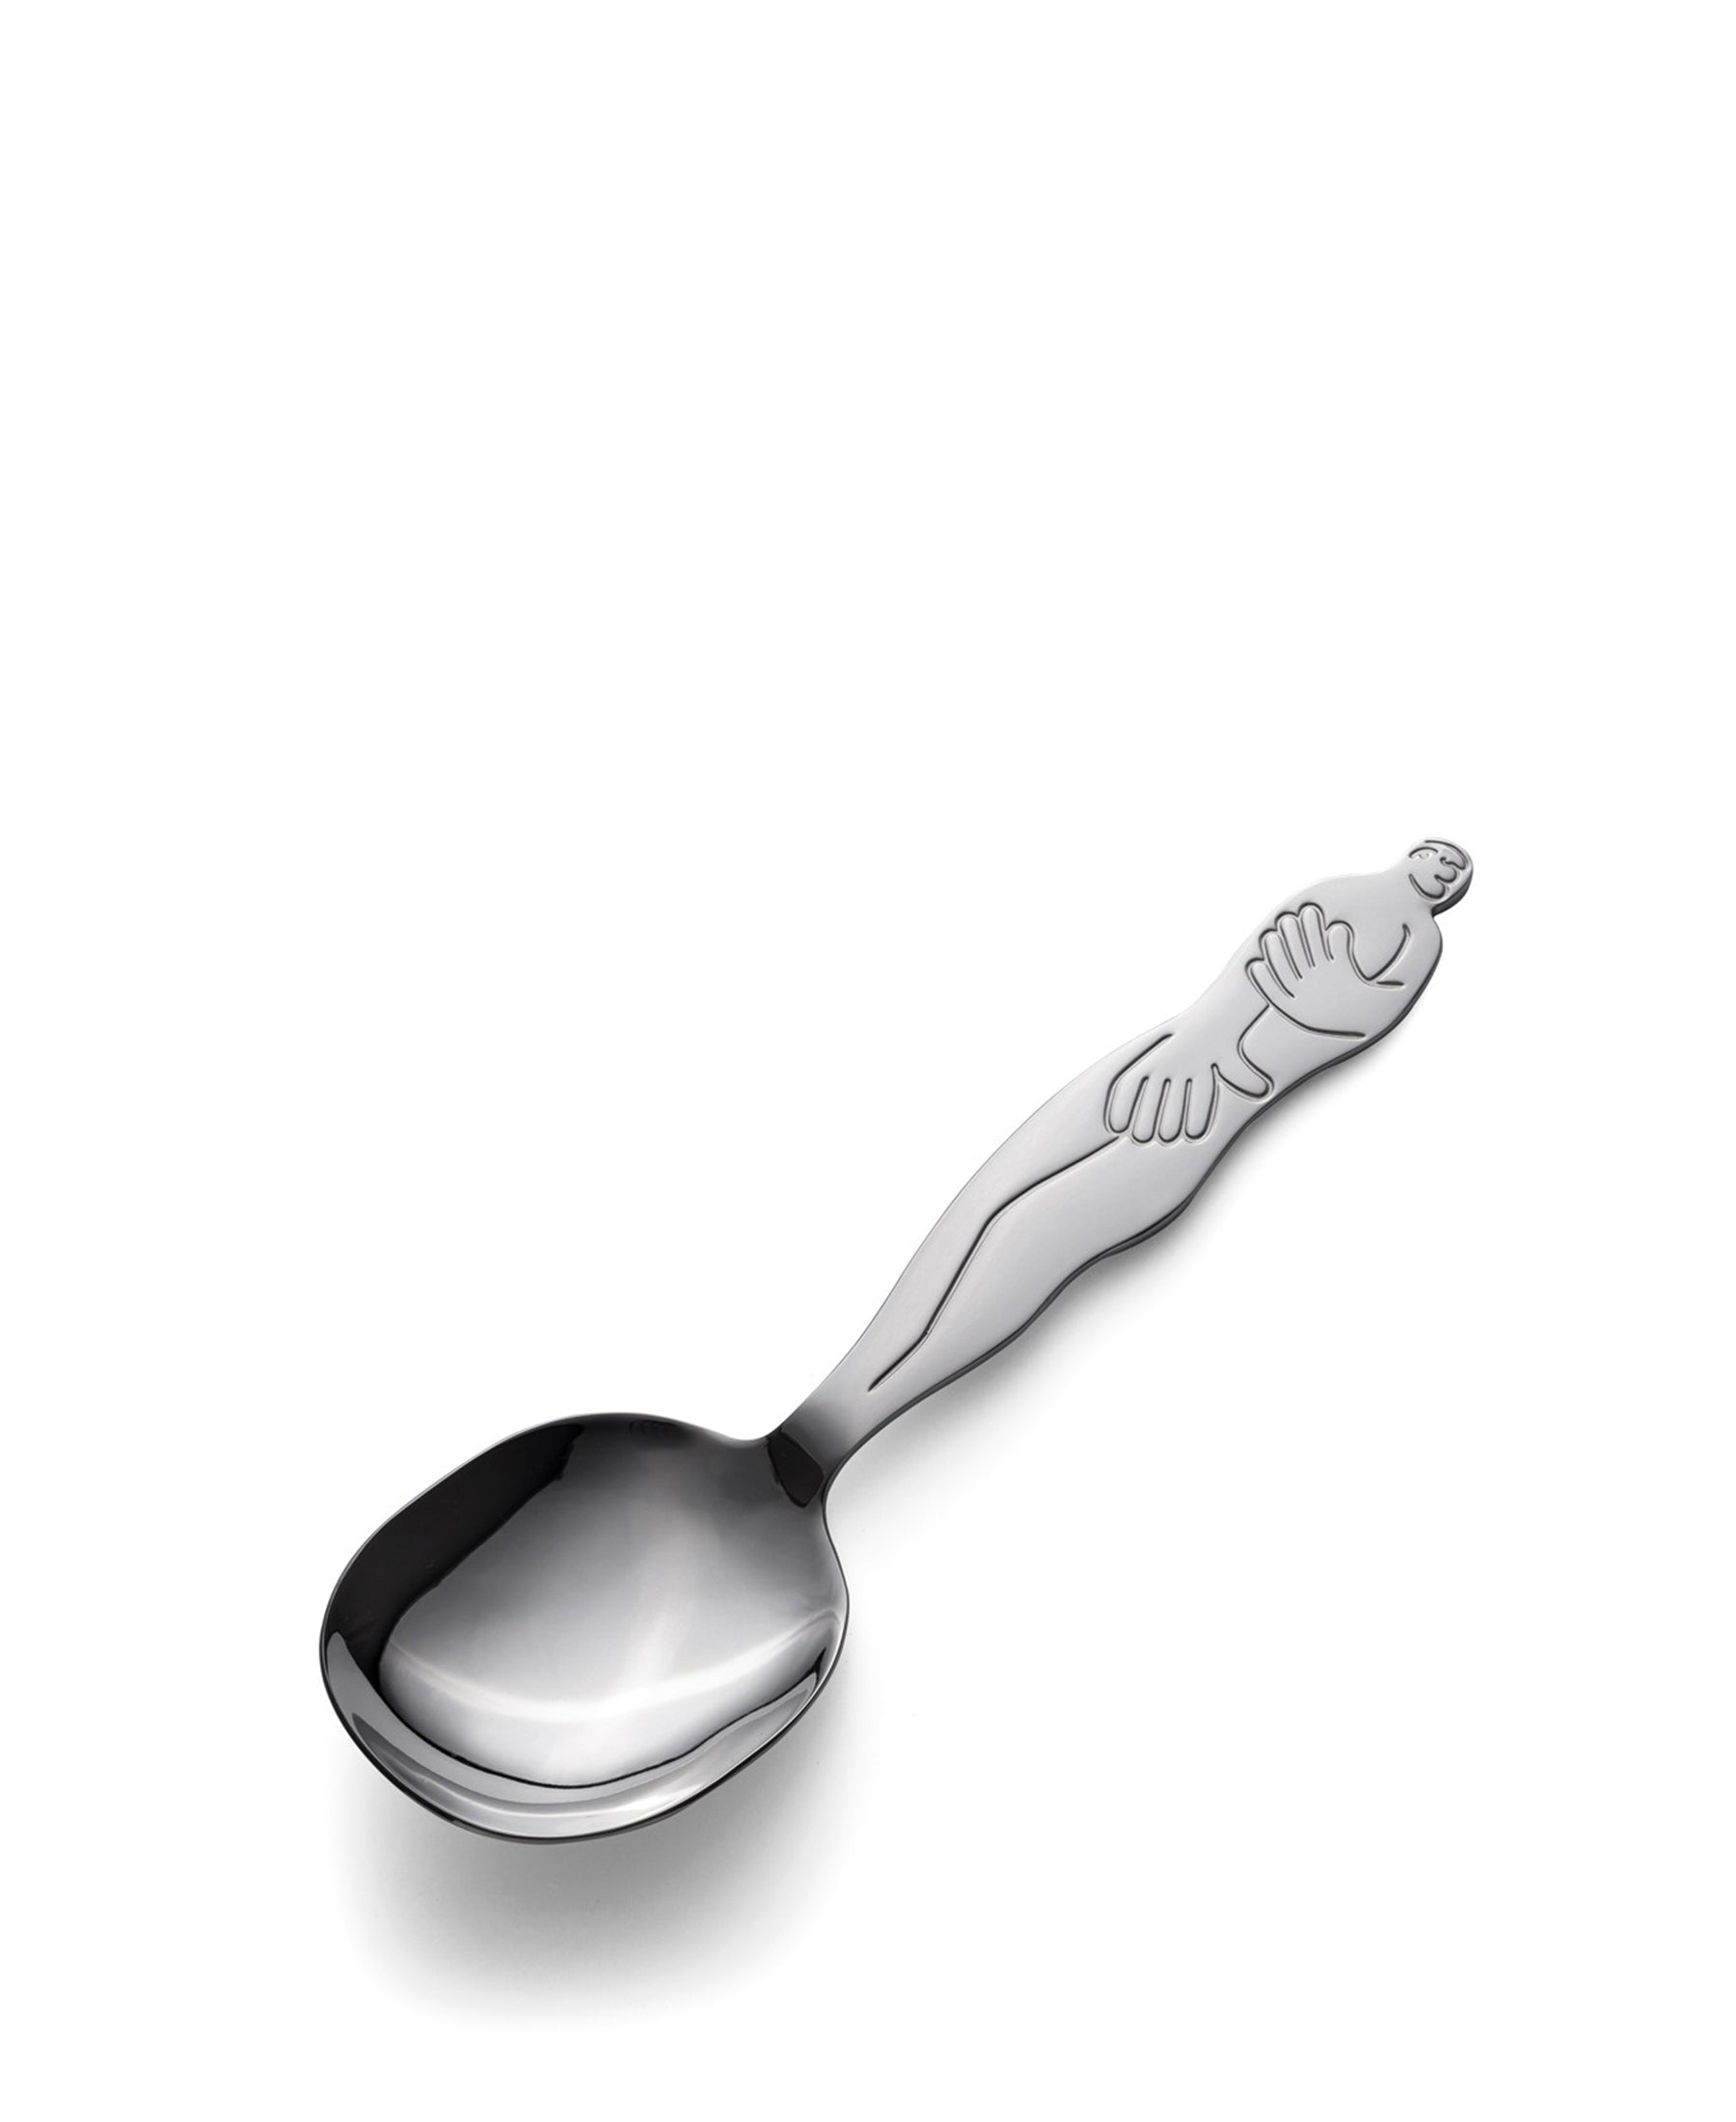 Carrol Boyes Serving Spoon - Silver